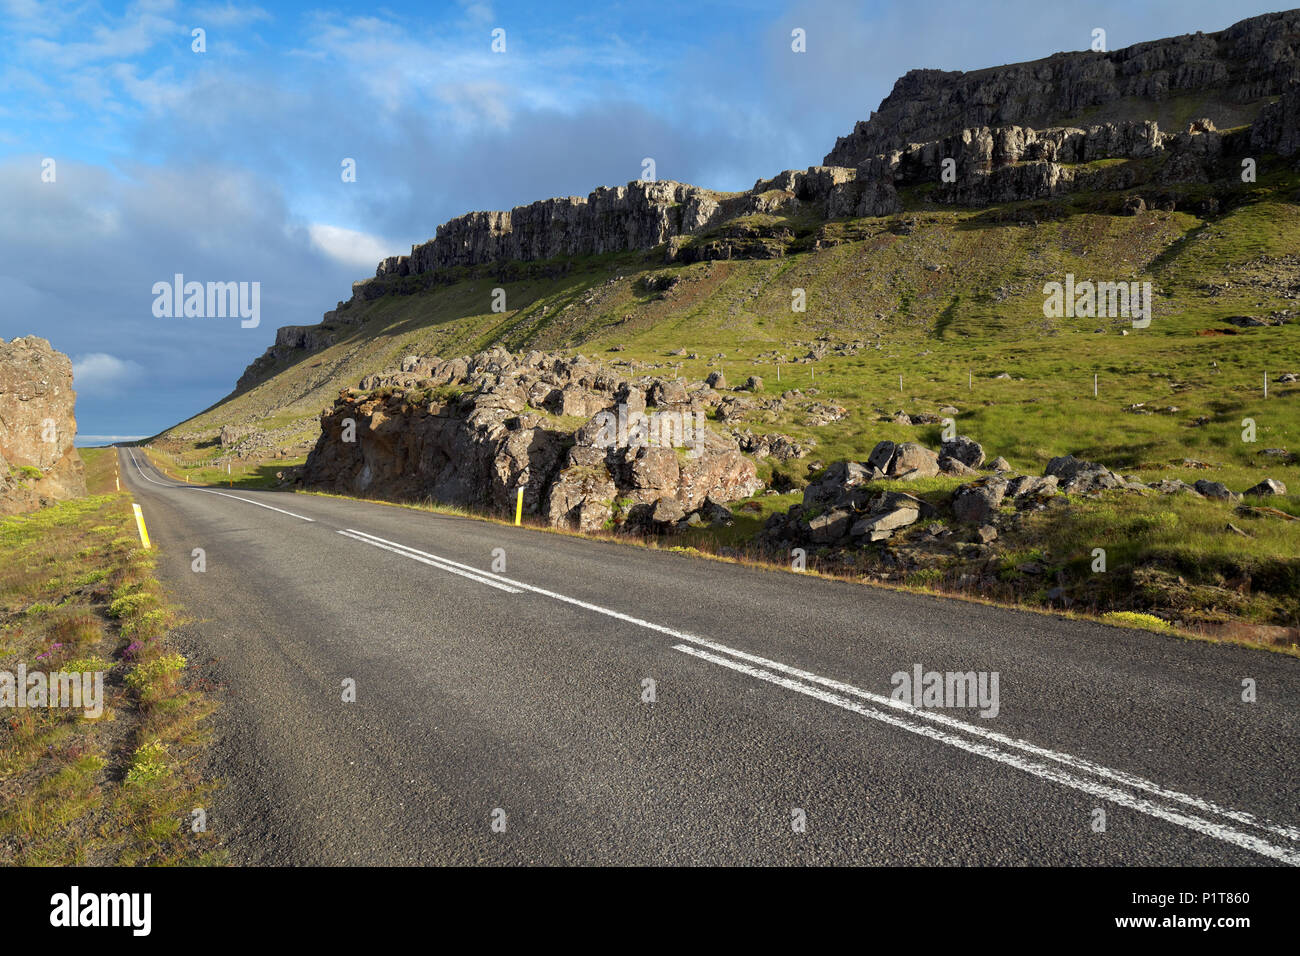 Iceland's scenic Ring Road running through mountains near Lækjavik Coastline, East Iceland, Iceland Stock Photo